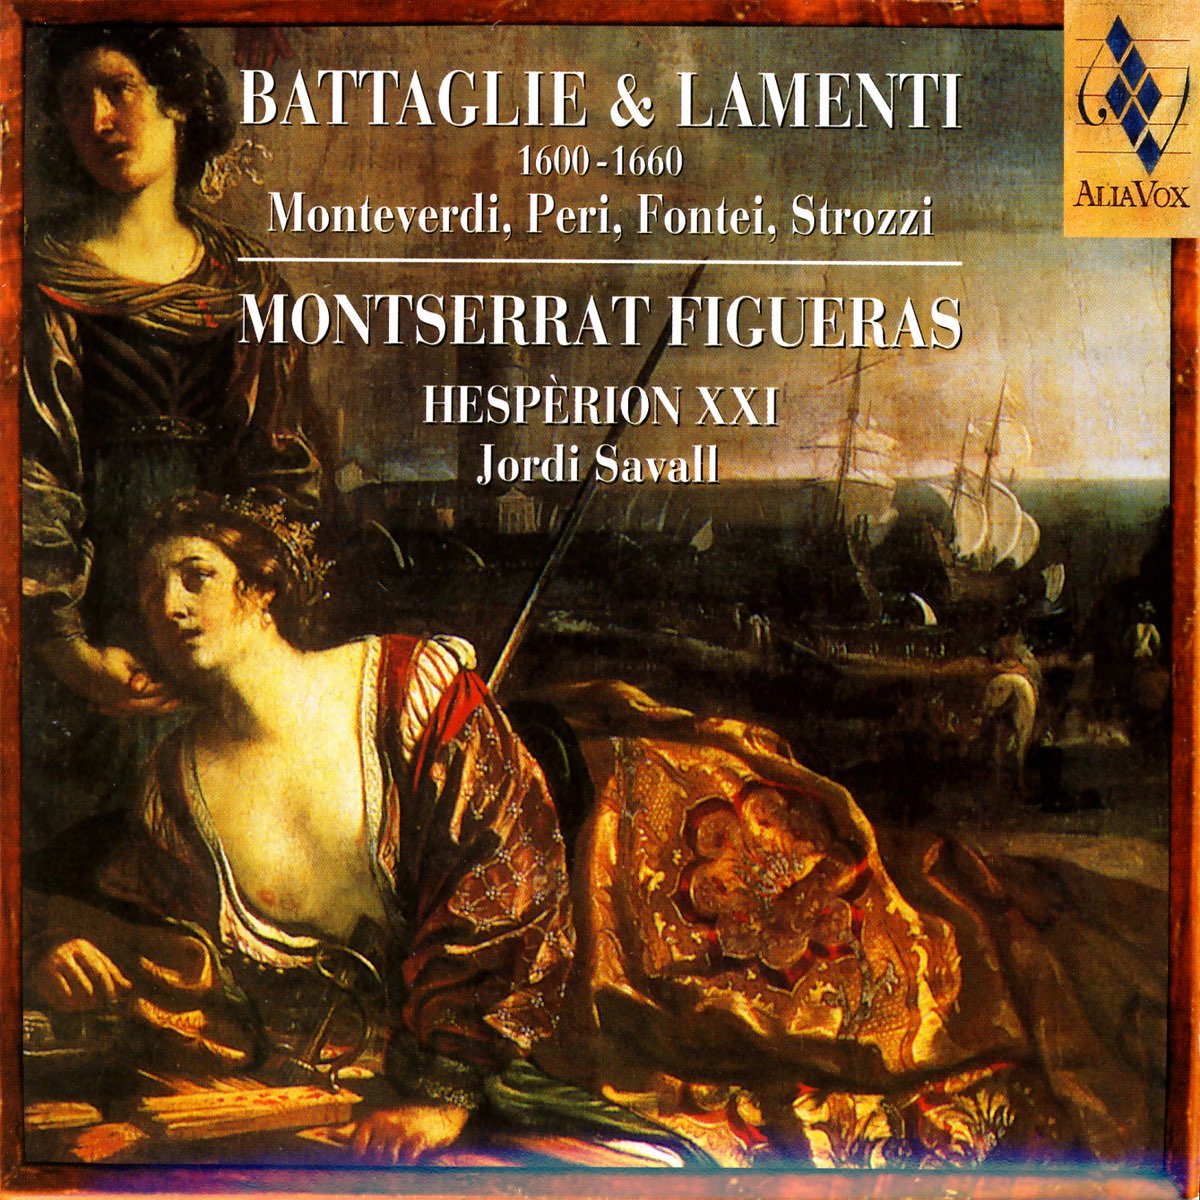 ‎Battaglie & Lamenti 1600-1660: Monteverdi, Peri, Fontei, Strozzi by ...